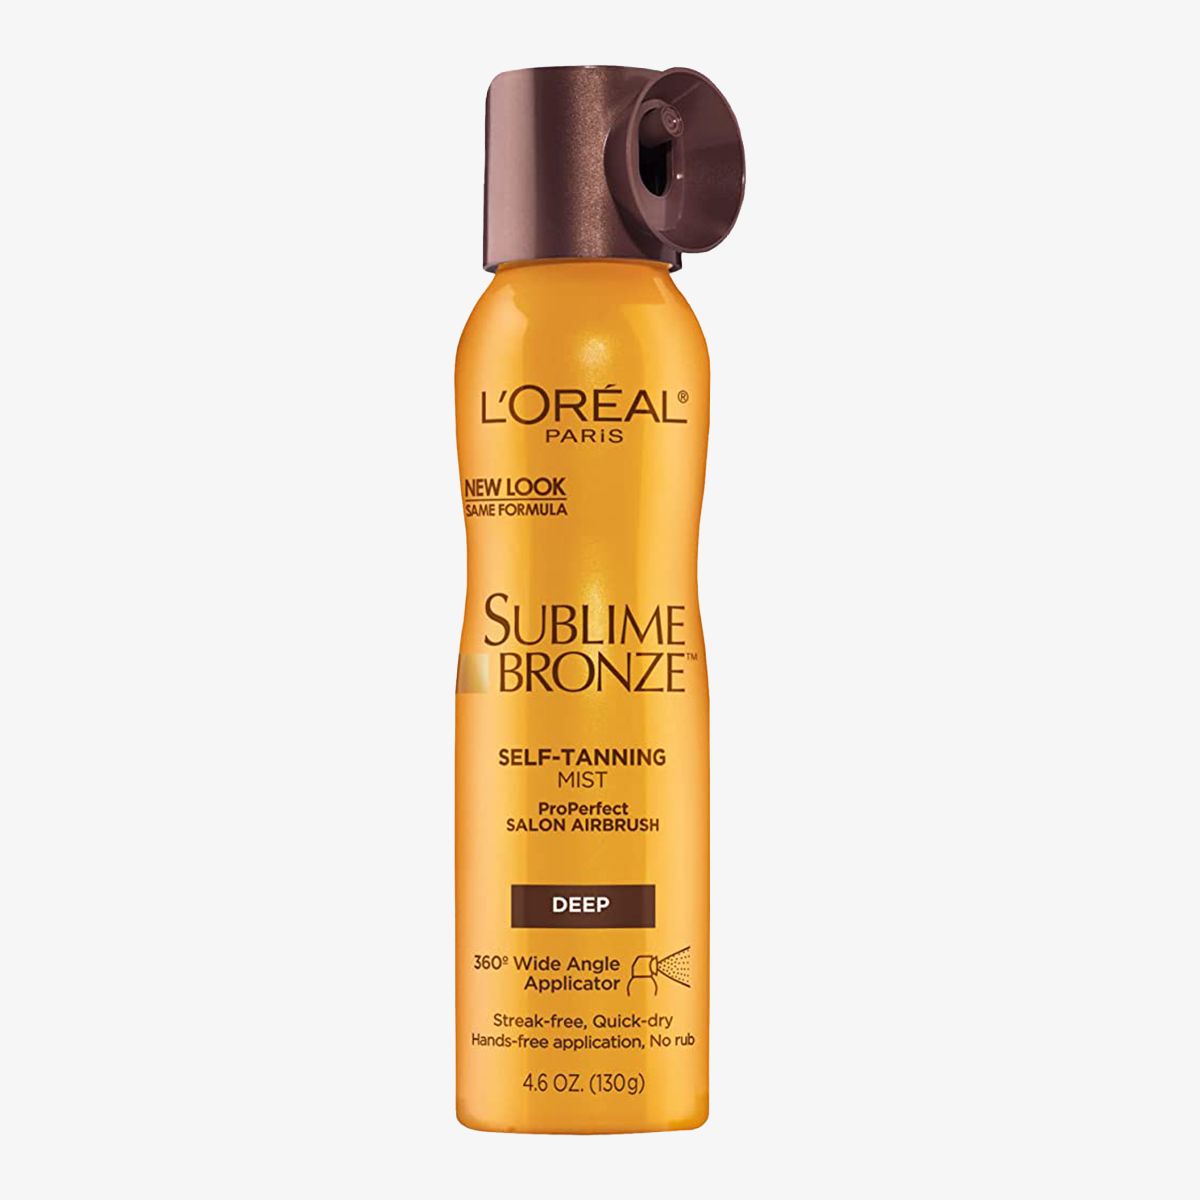 L’Oréal Paris Sublime Bronze ProPerfect Salon Airbrush Self-Tanning Mist Medium Natural Tan